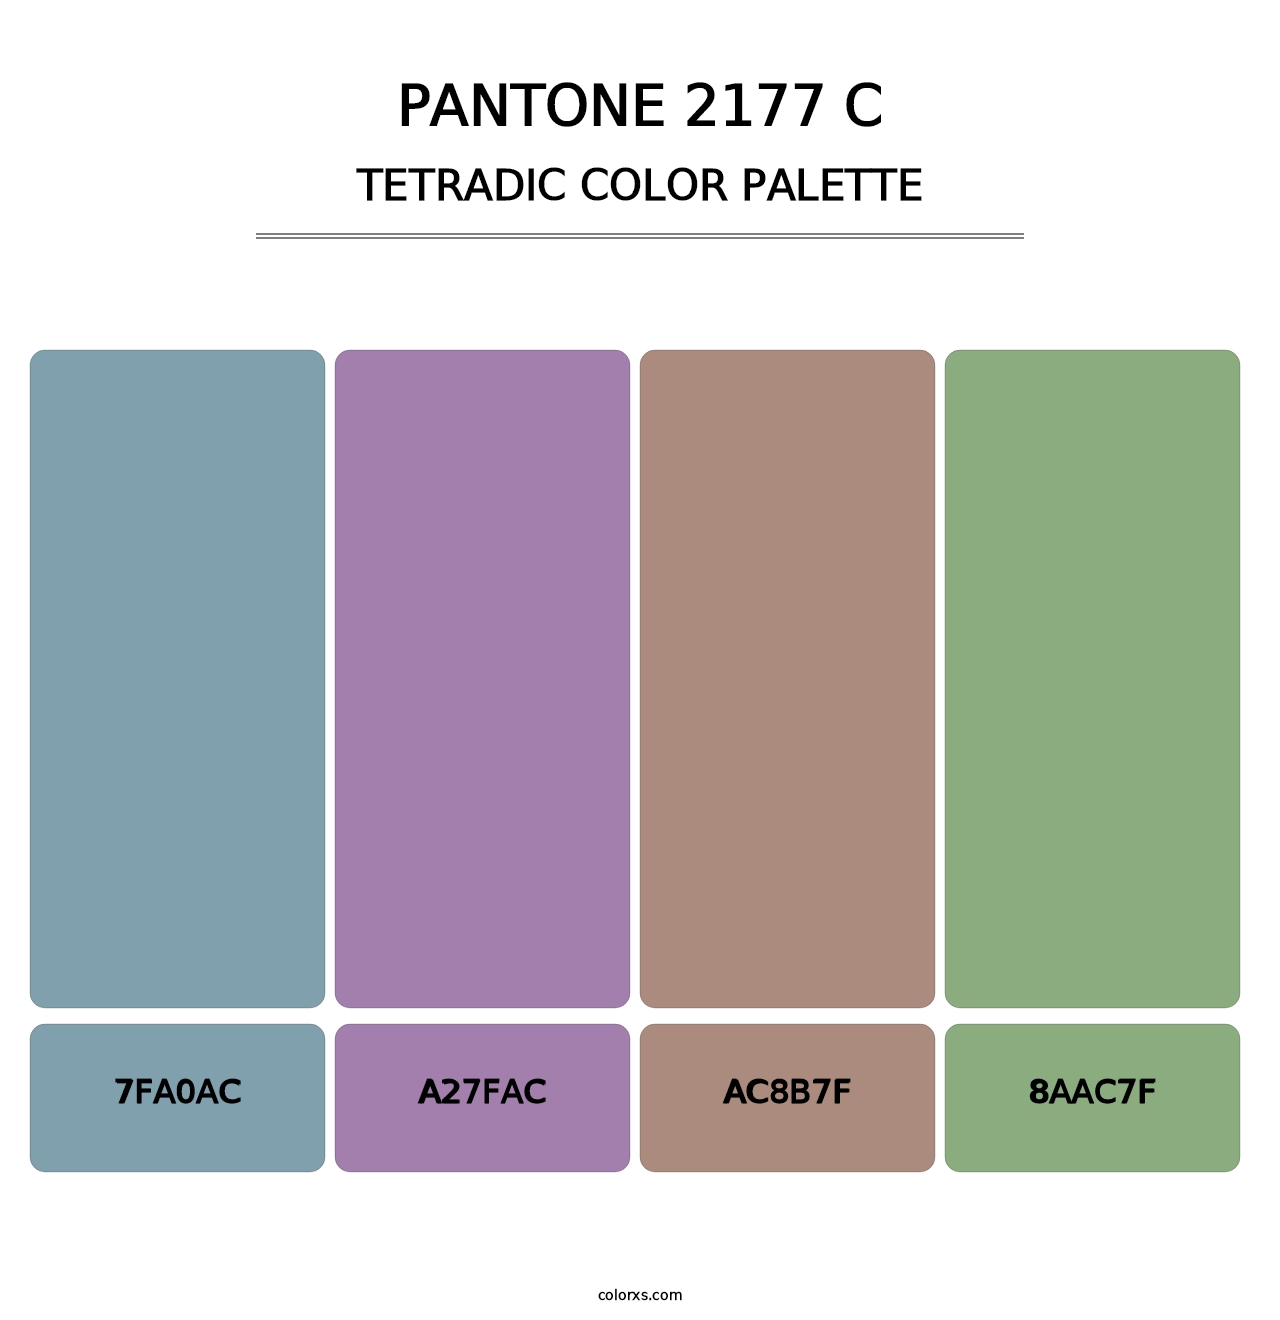 PANTONE 2177 C - Tetradic Color Palette